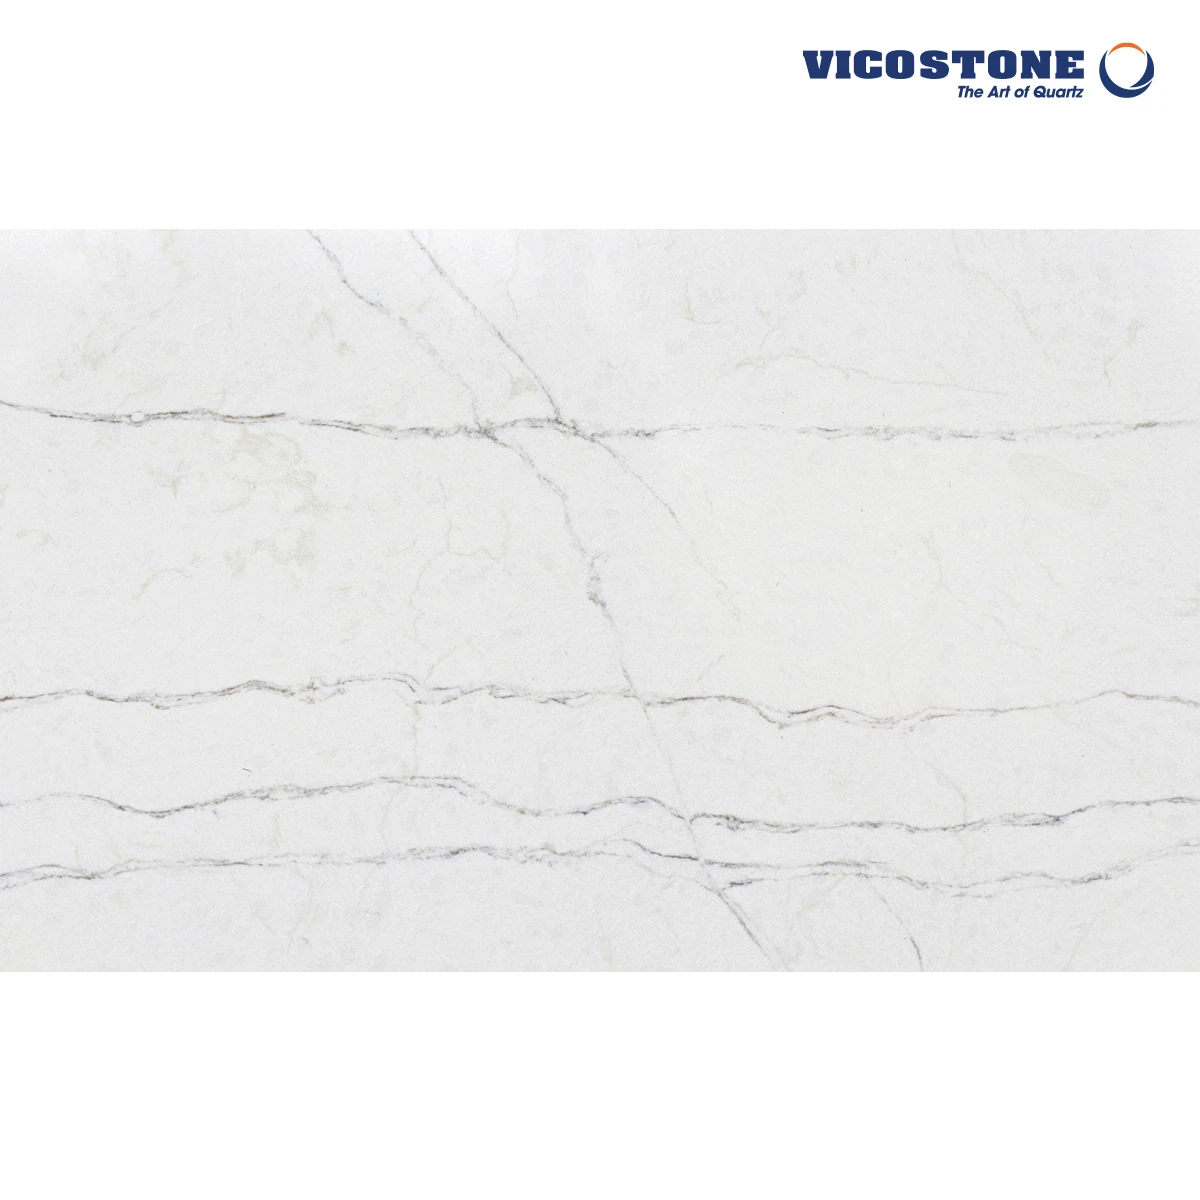 Engineered Quartz Stone - Vicostone Luce Di Luna BQ8690 with stunning linear veins adding minor movements at certain crossings